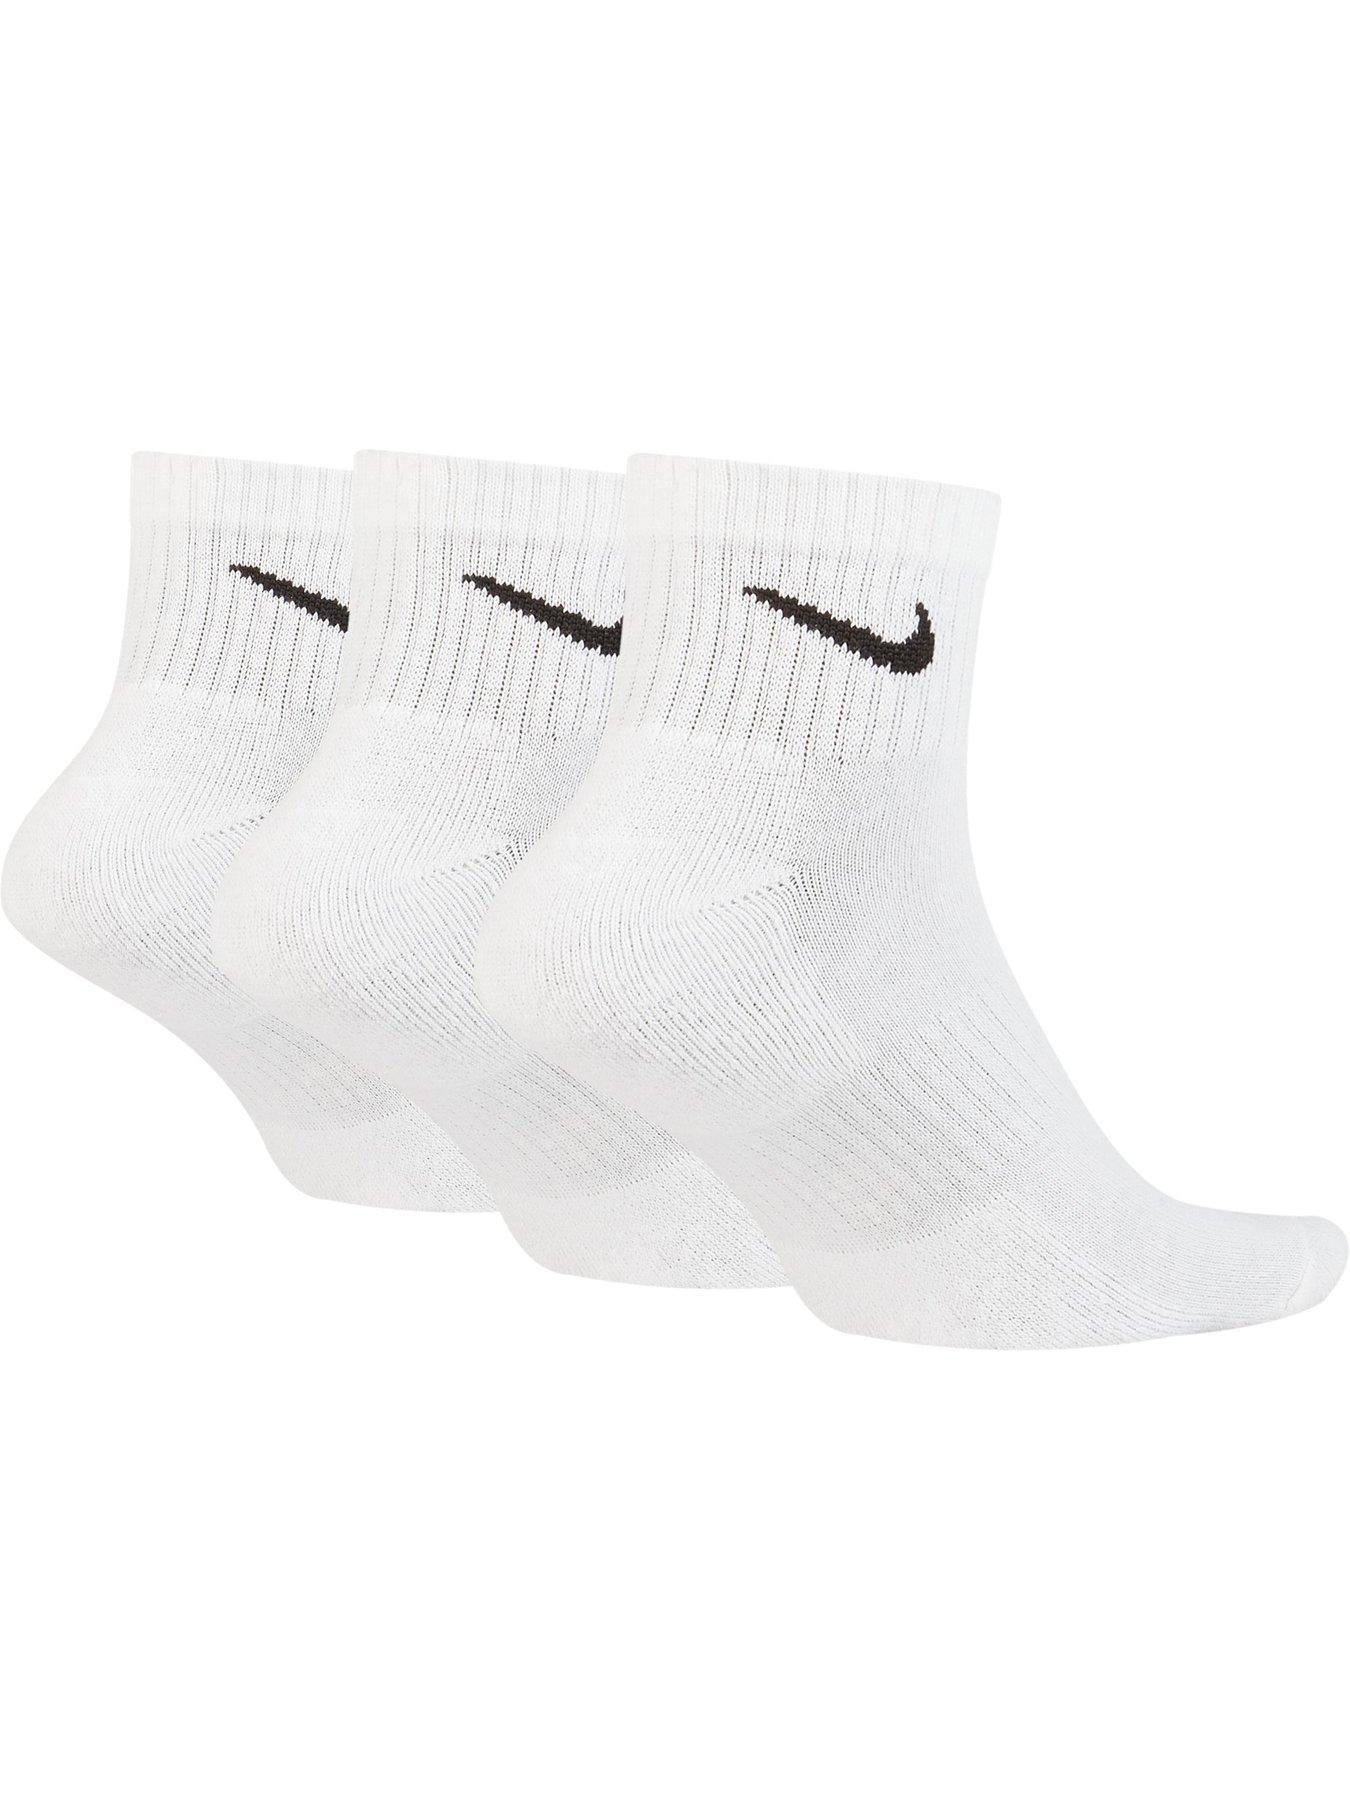 nike ankle socks white